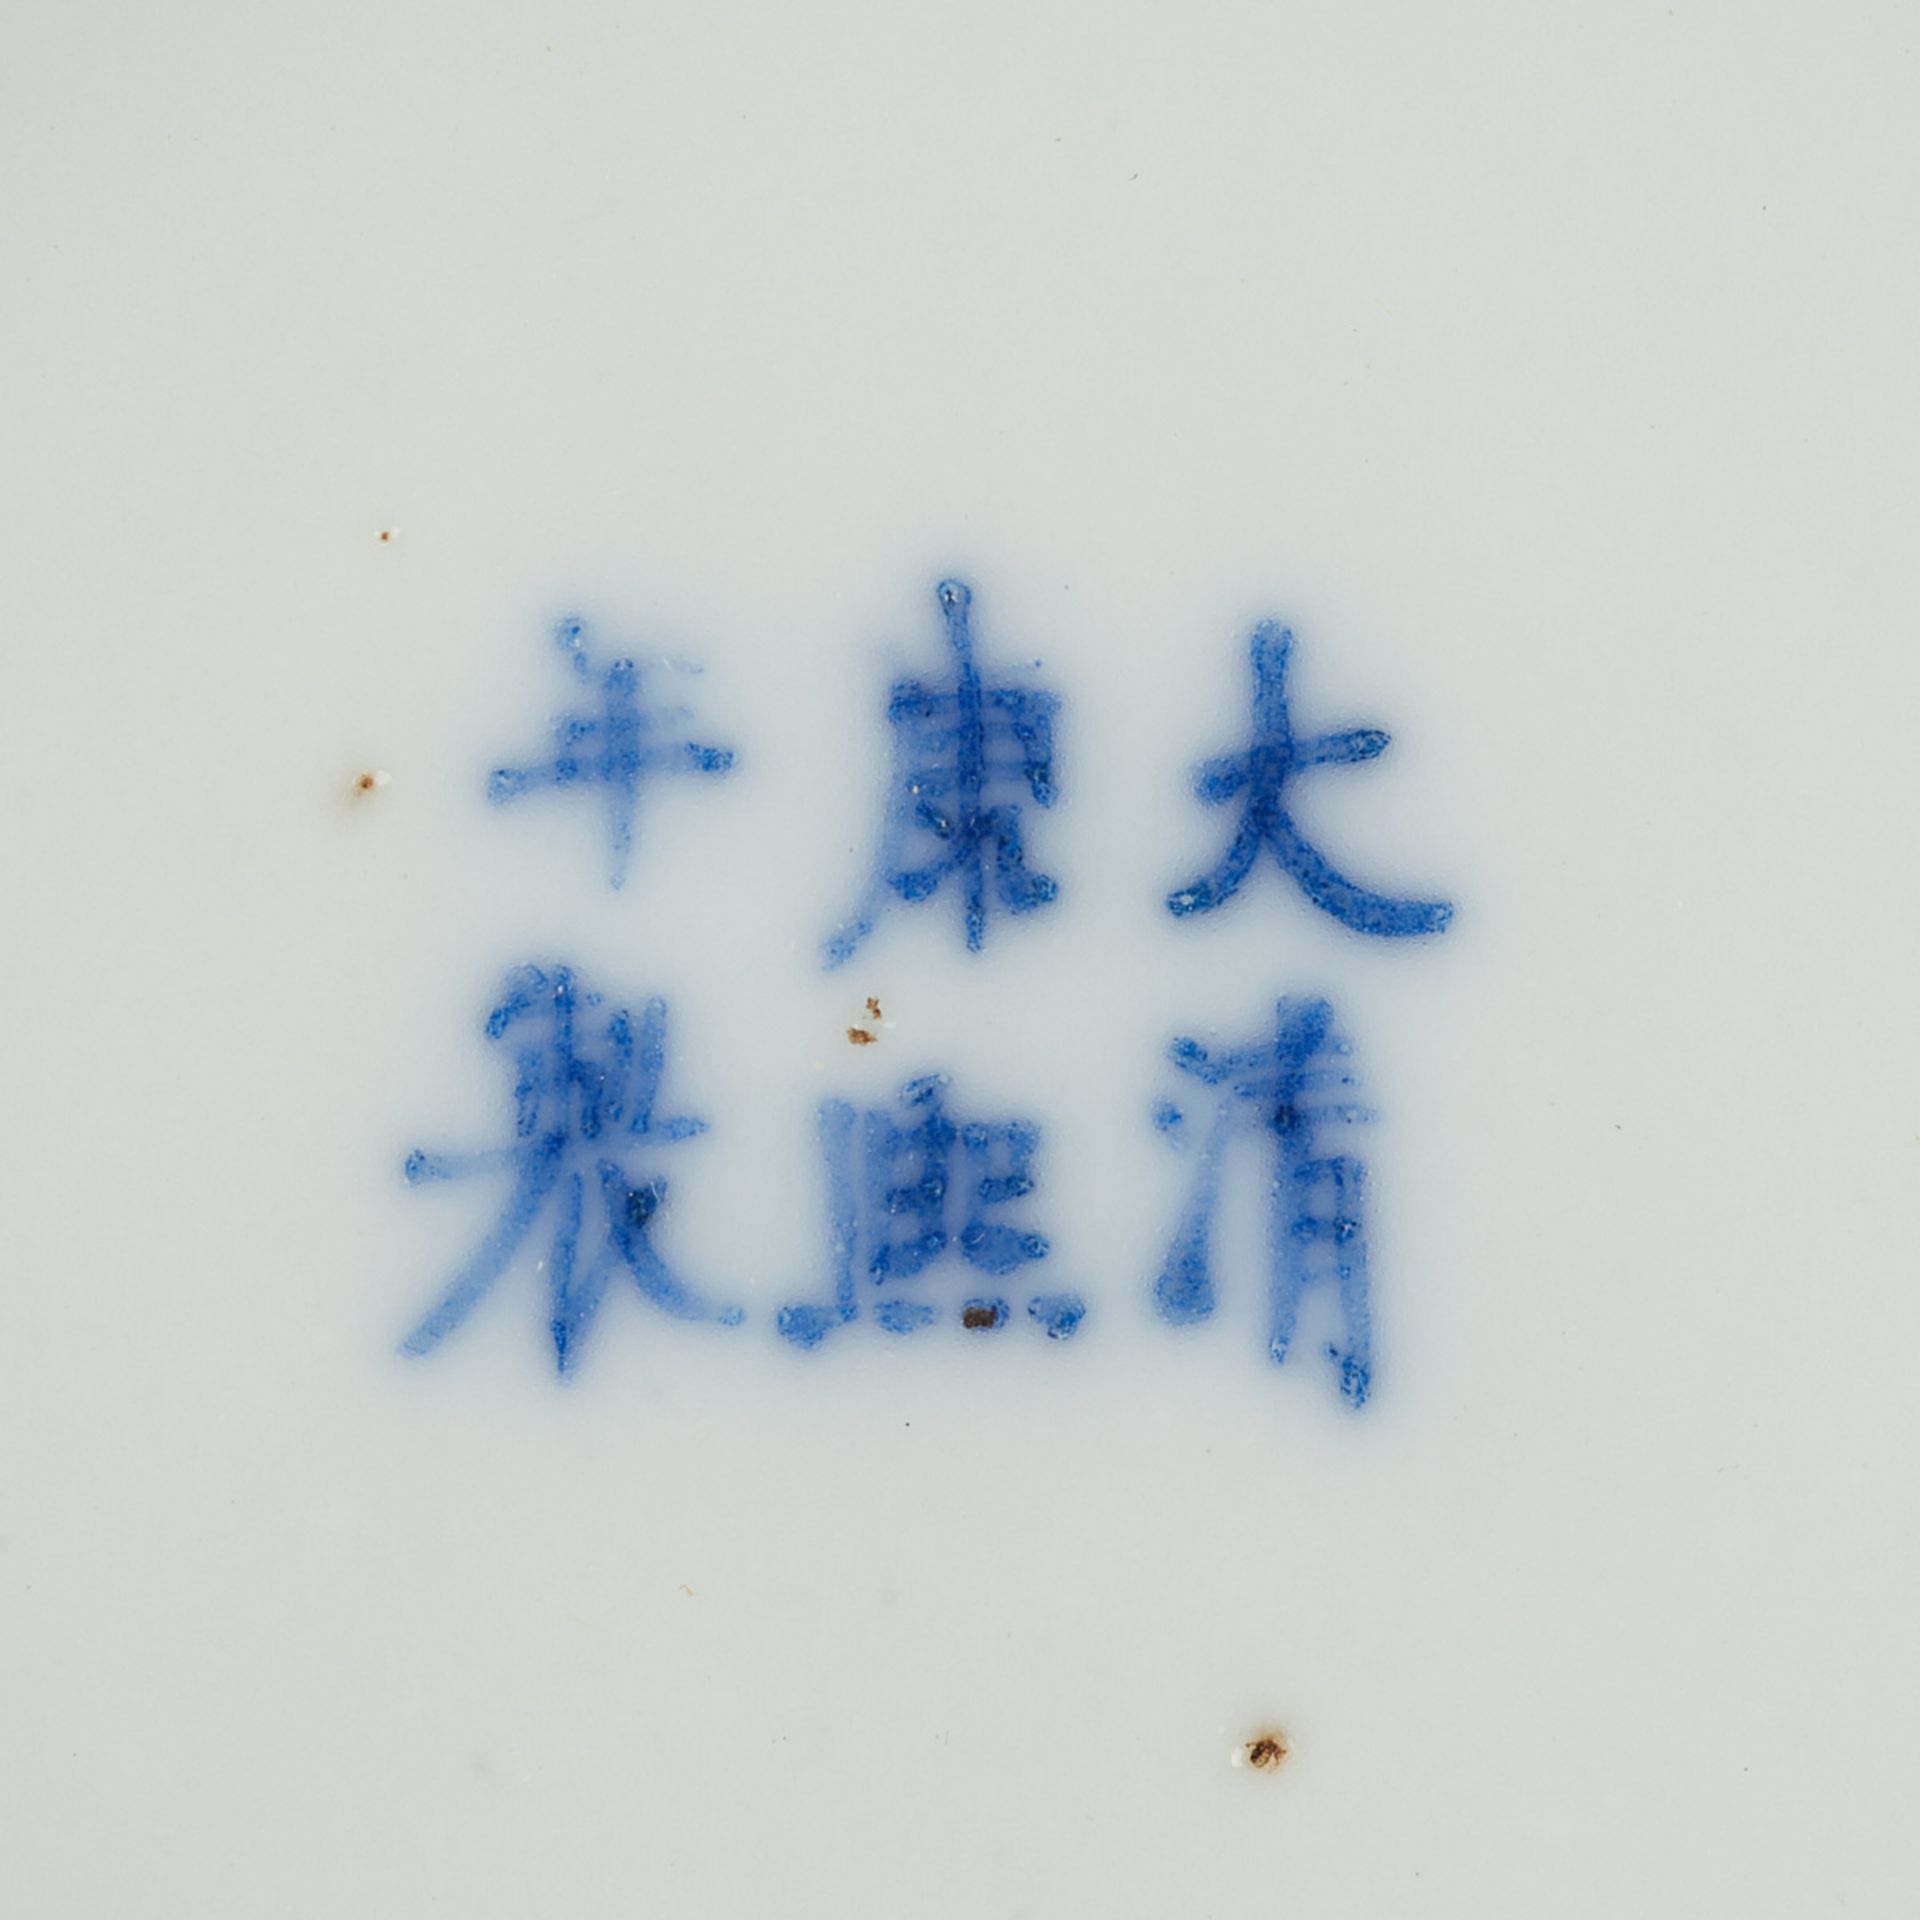 4 Bleu de Hue Chinese Porcelain Plates - Image 5 of 7